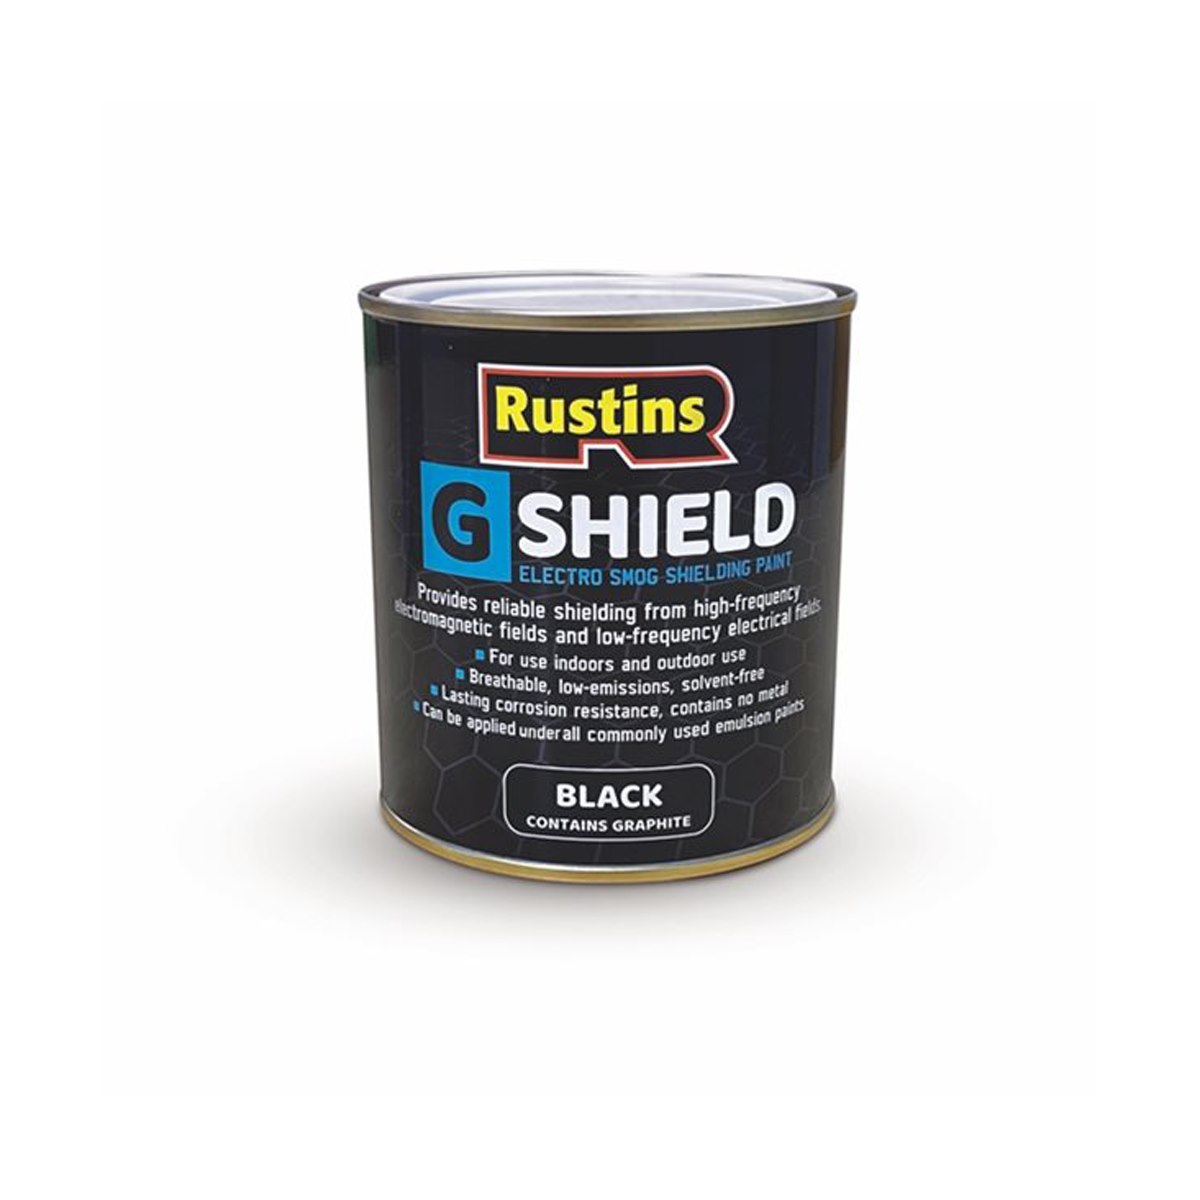 Rustins G Shield Electro Smog Shielding Paint Black 1Litre